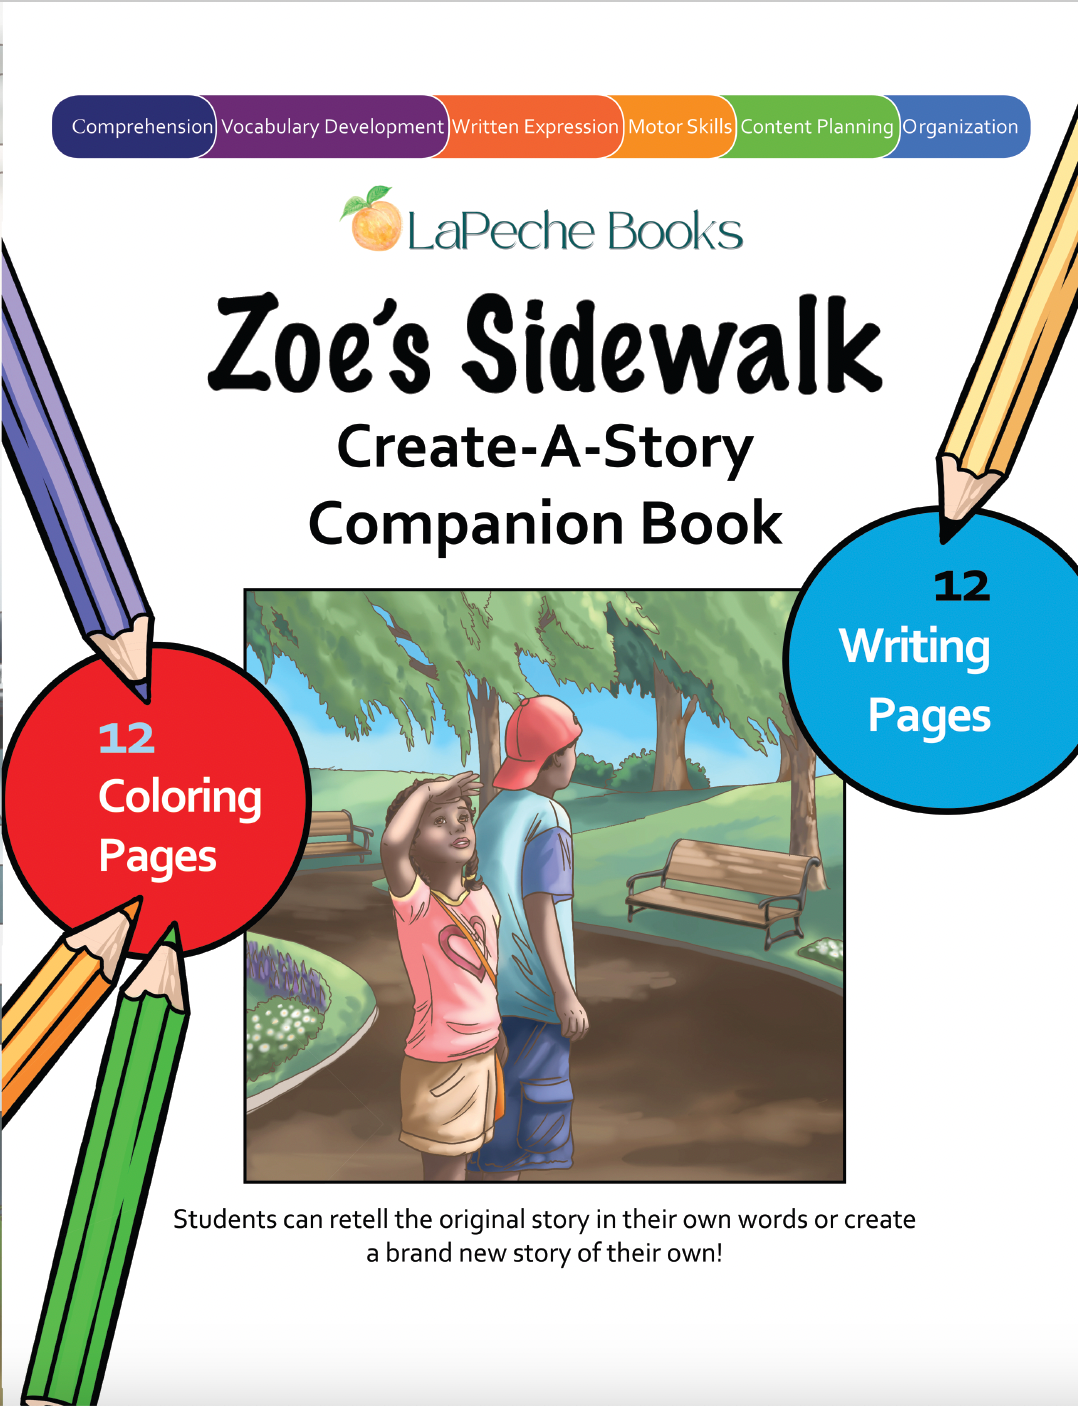 New for Summer! Zoe's Sidewalk Activity Create-A-Story Workbook